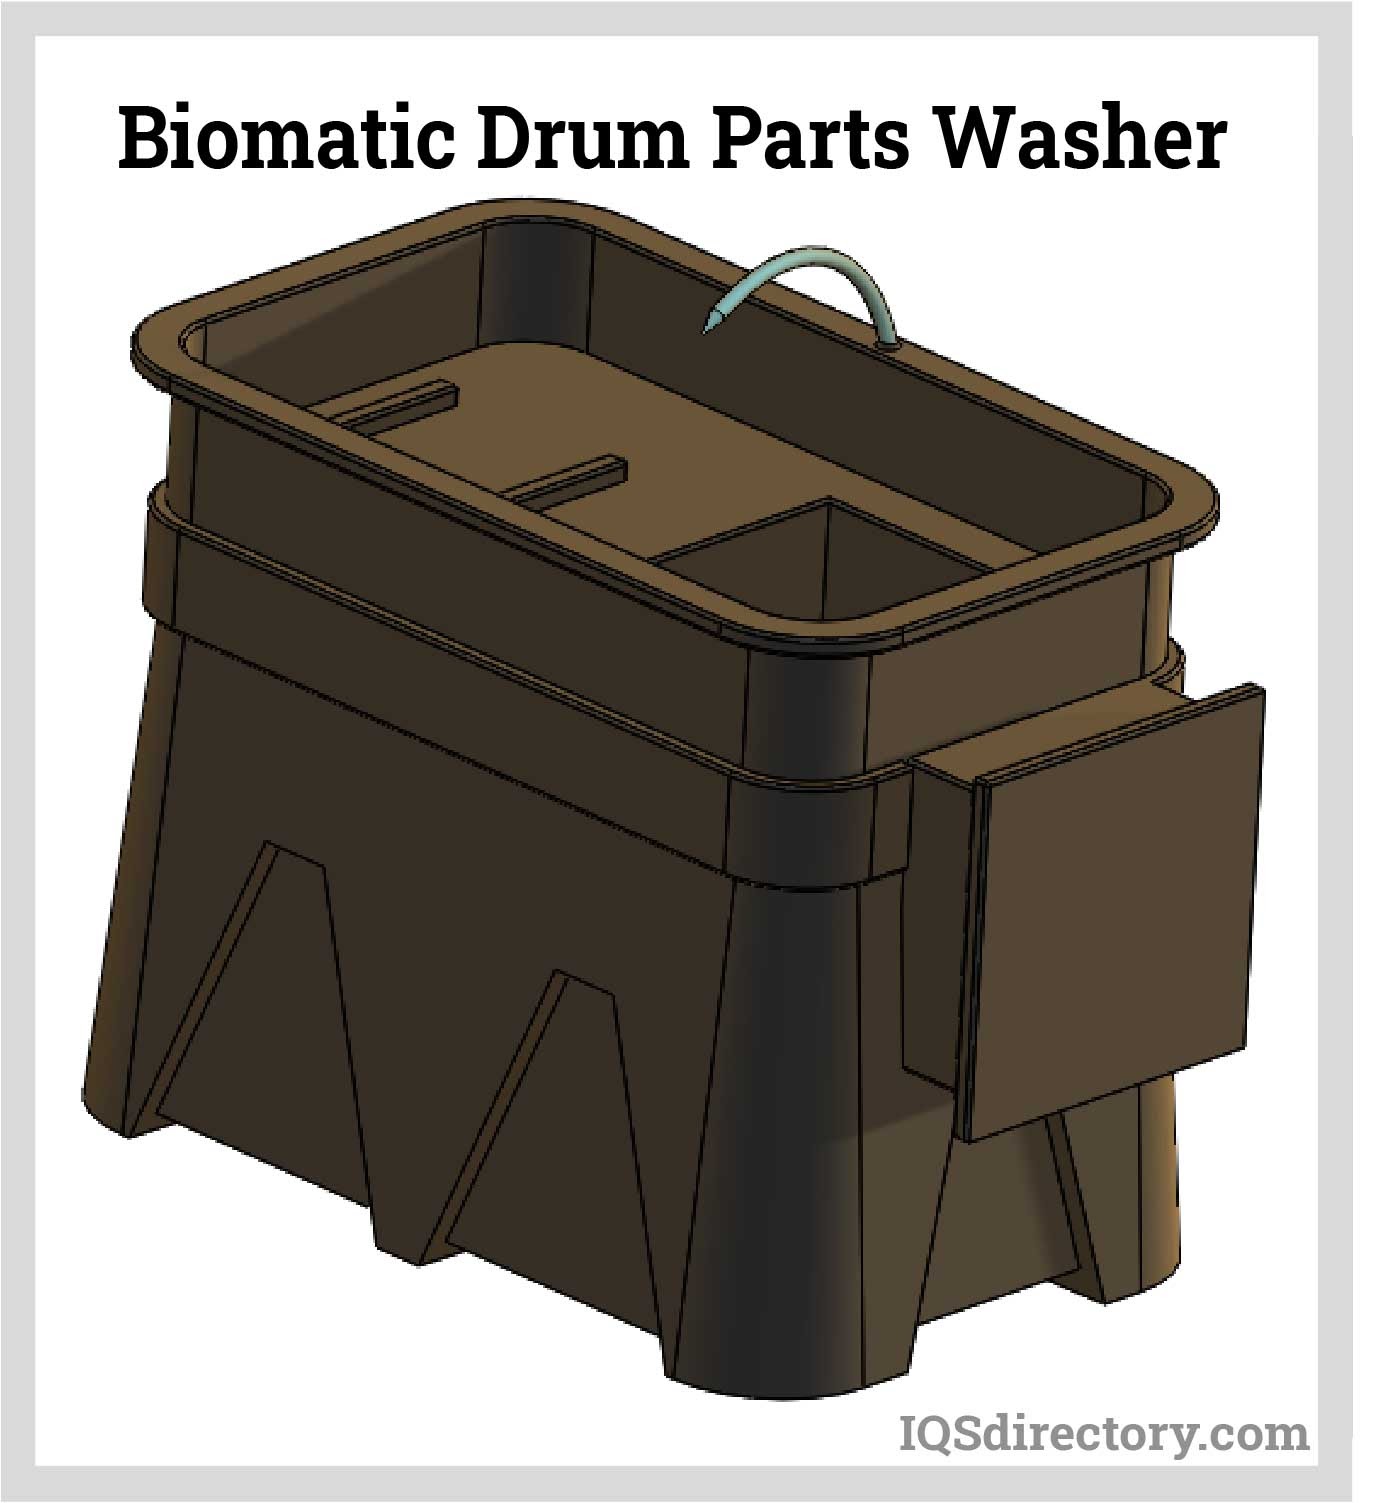 Biomatic Drum Parts Washer